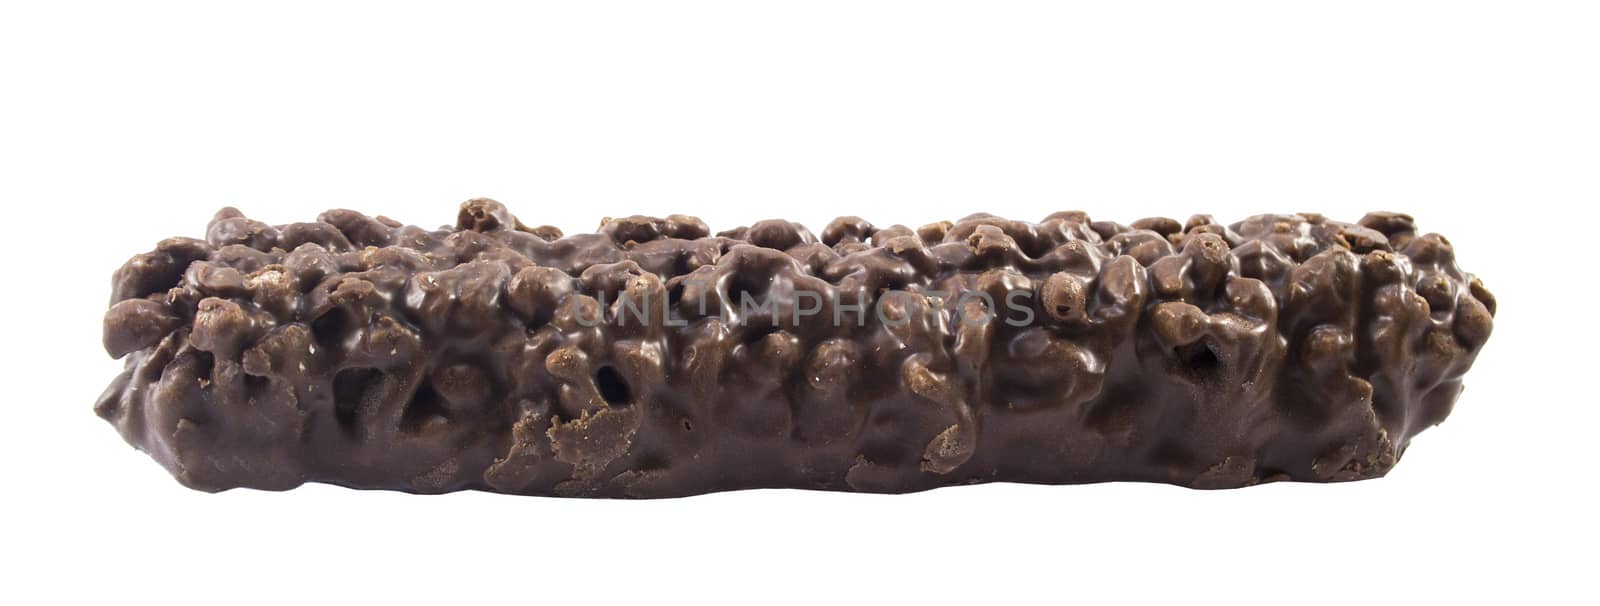 chocolate bar by designsstock